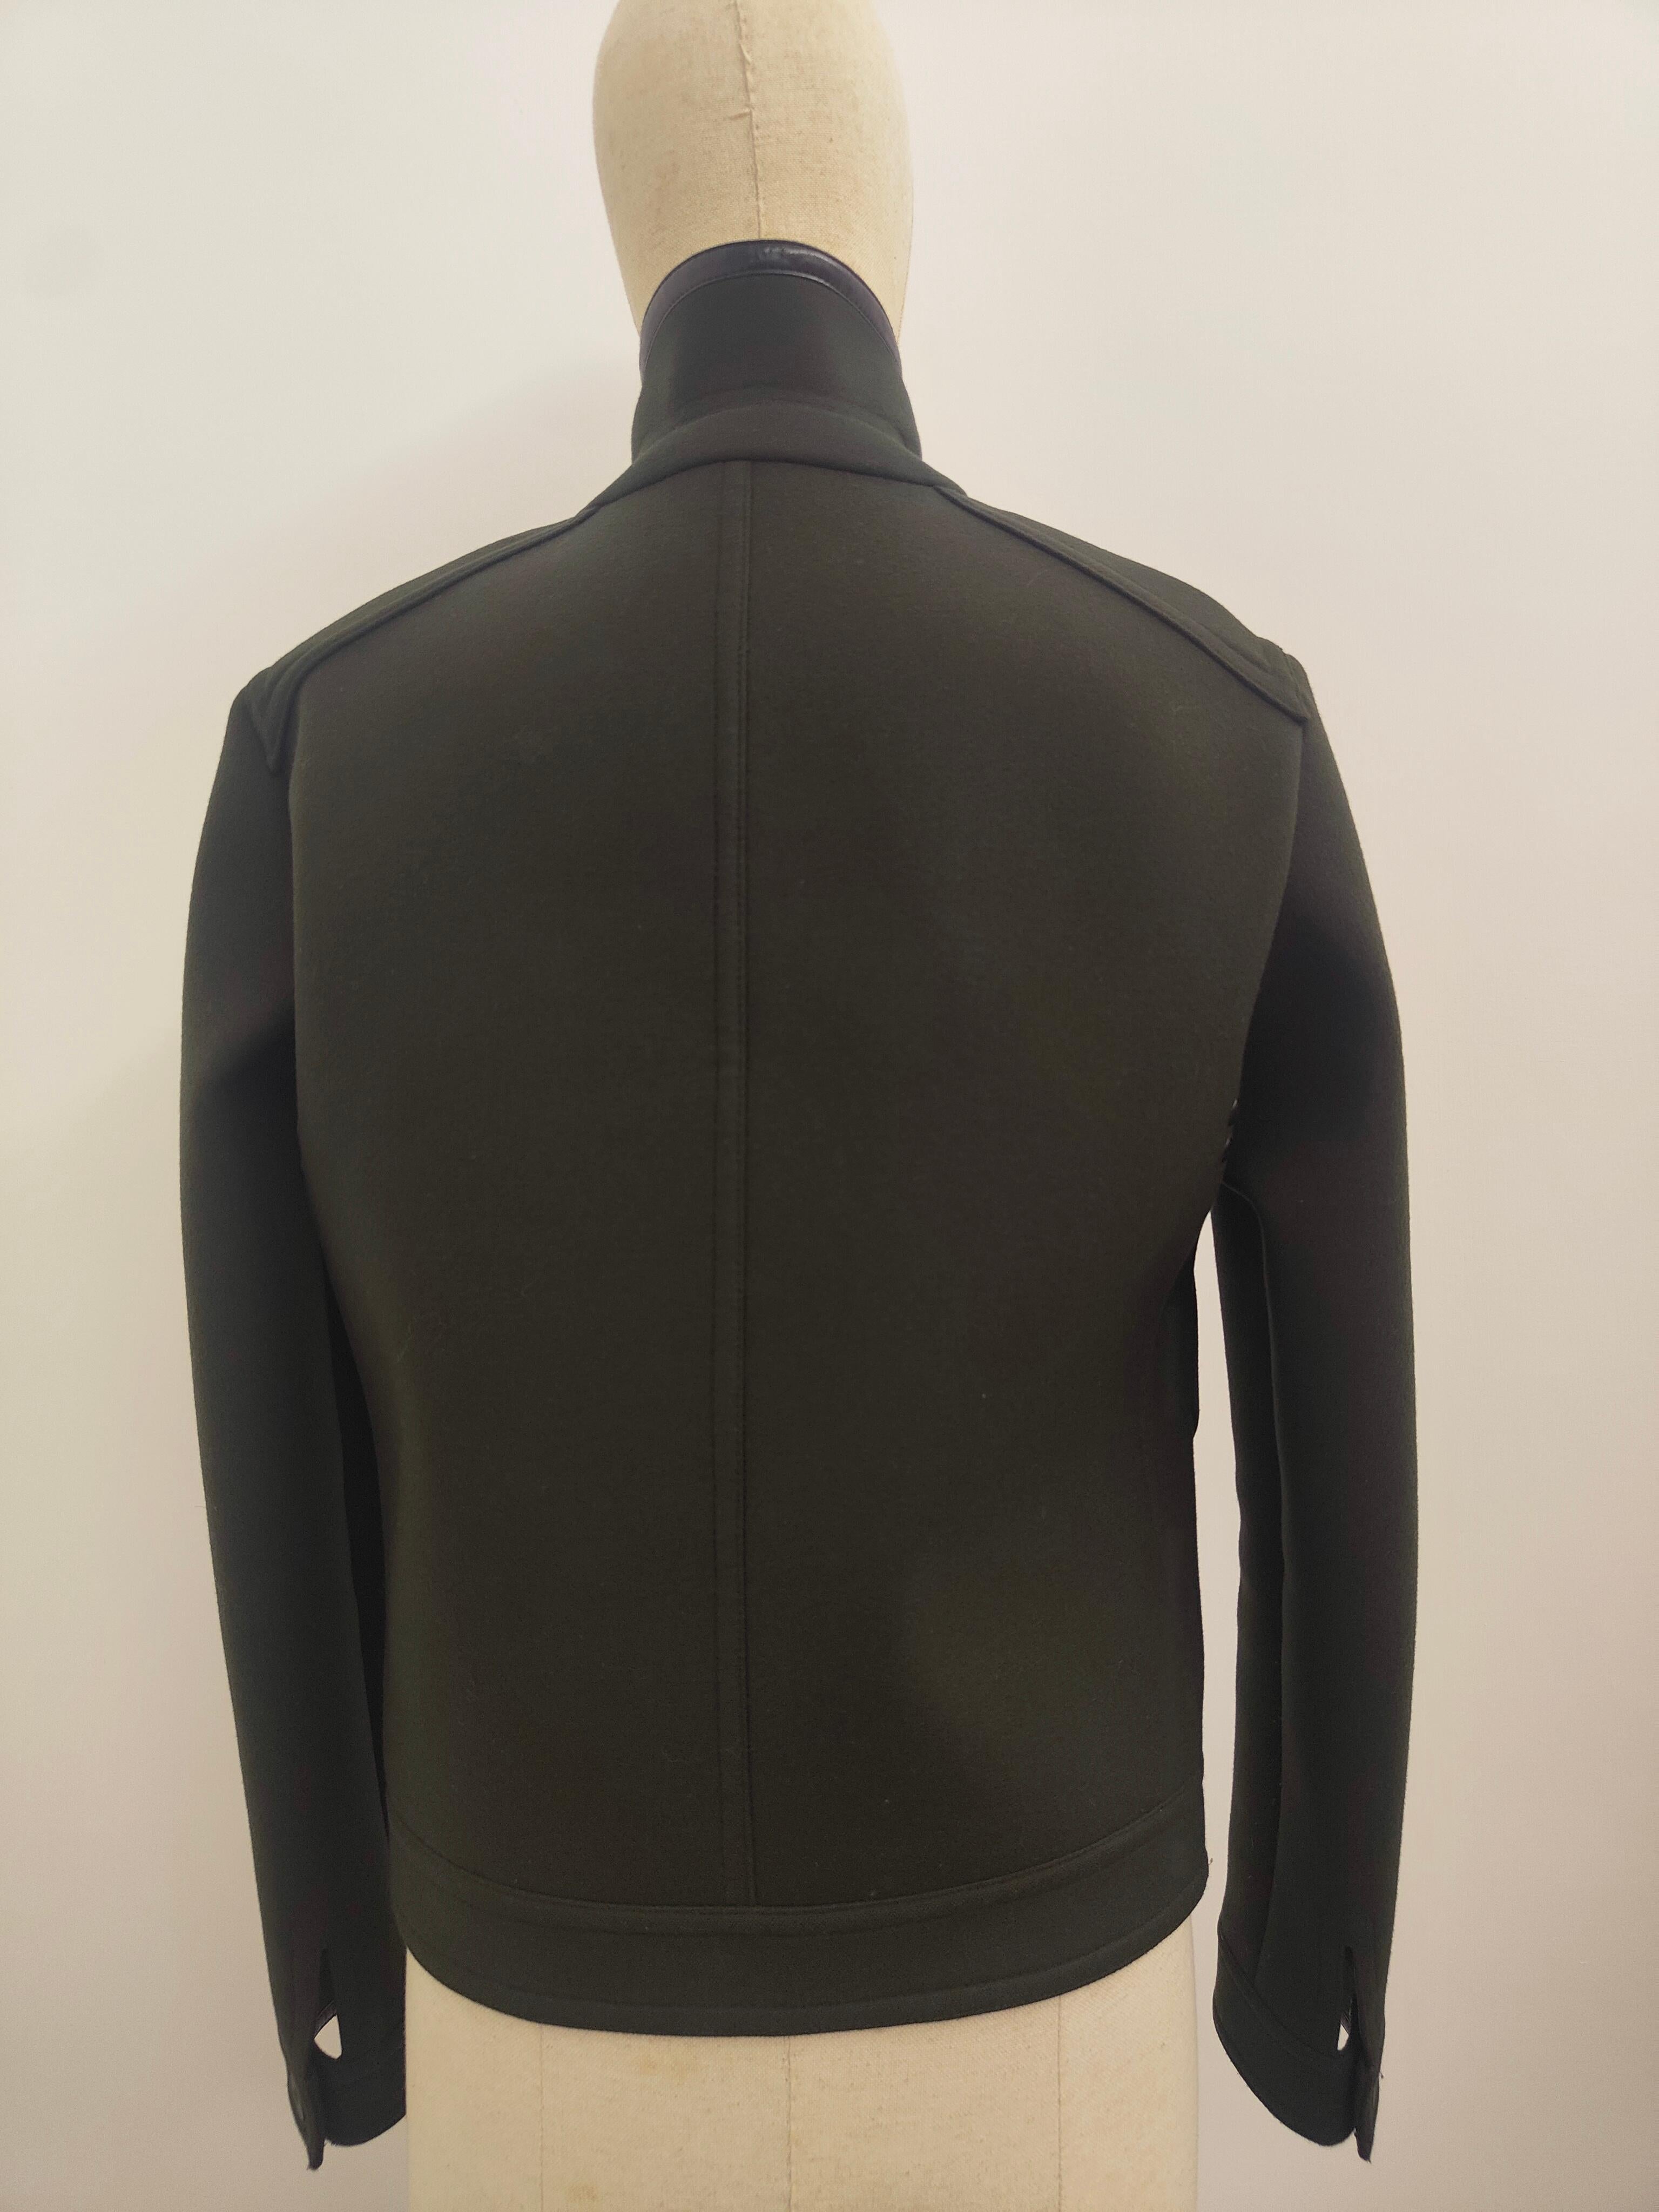 Balenciaga green jacket with black leather inserts
scuba jacket style
size M 